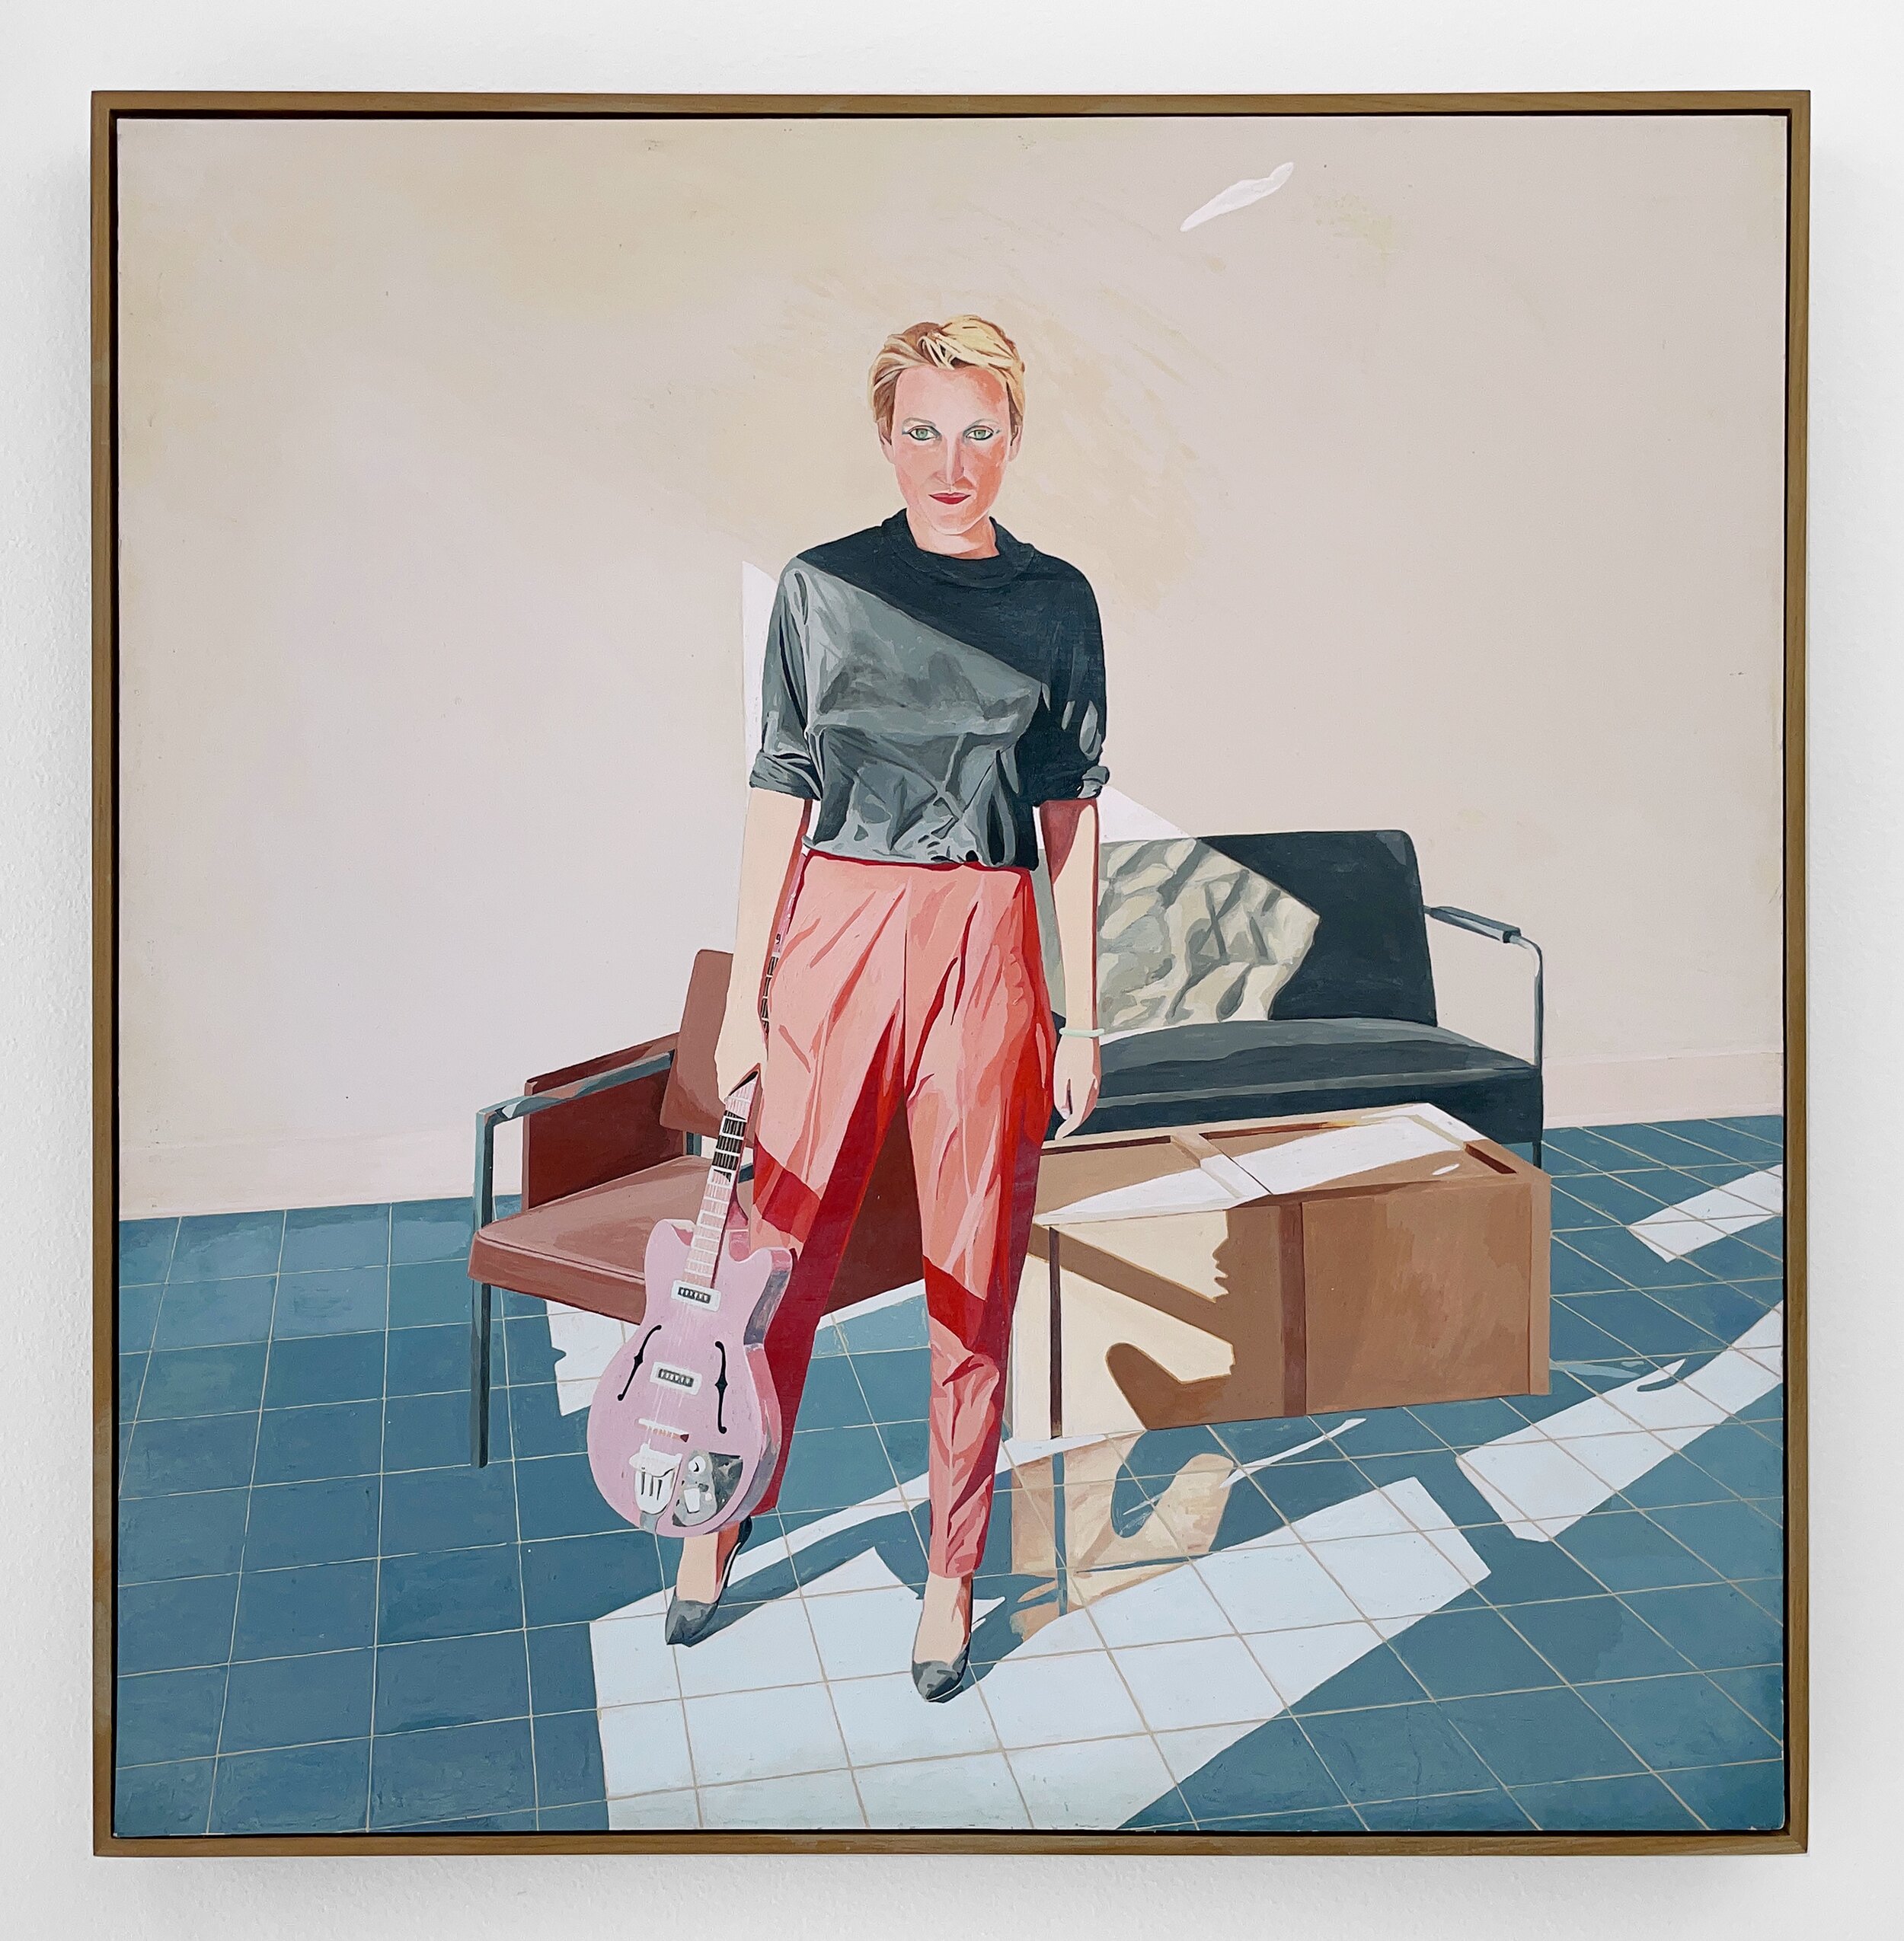  “Gillean”, 1980, acrylic on board, mounted on panel, 23 1/4” x 23” 